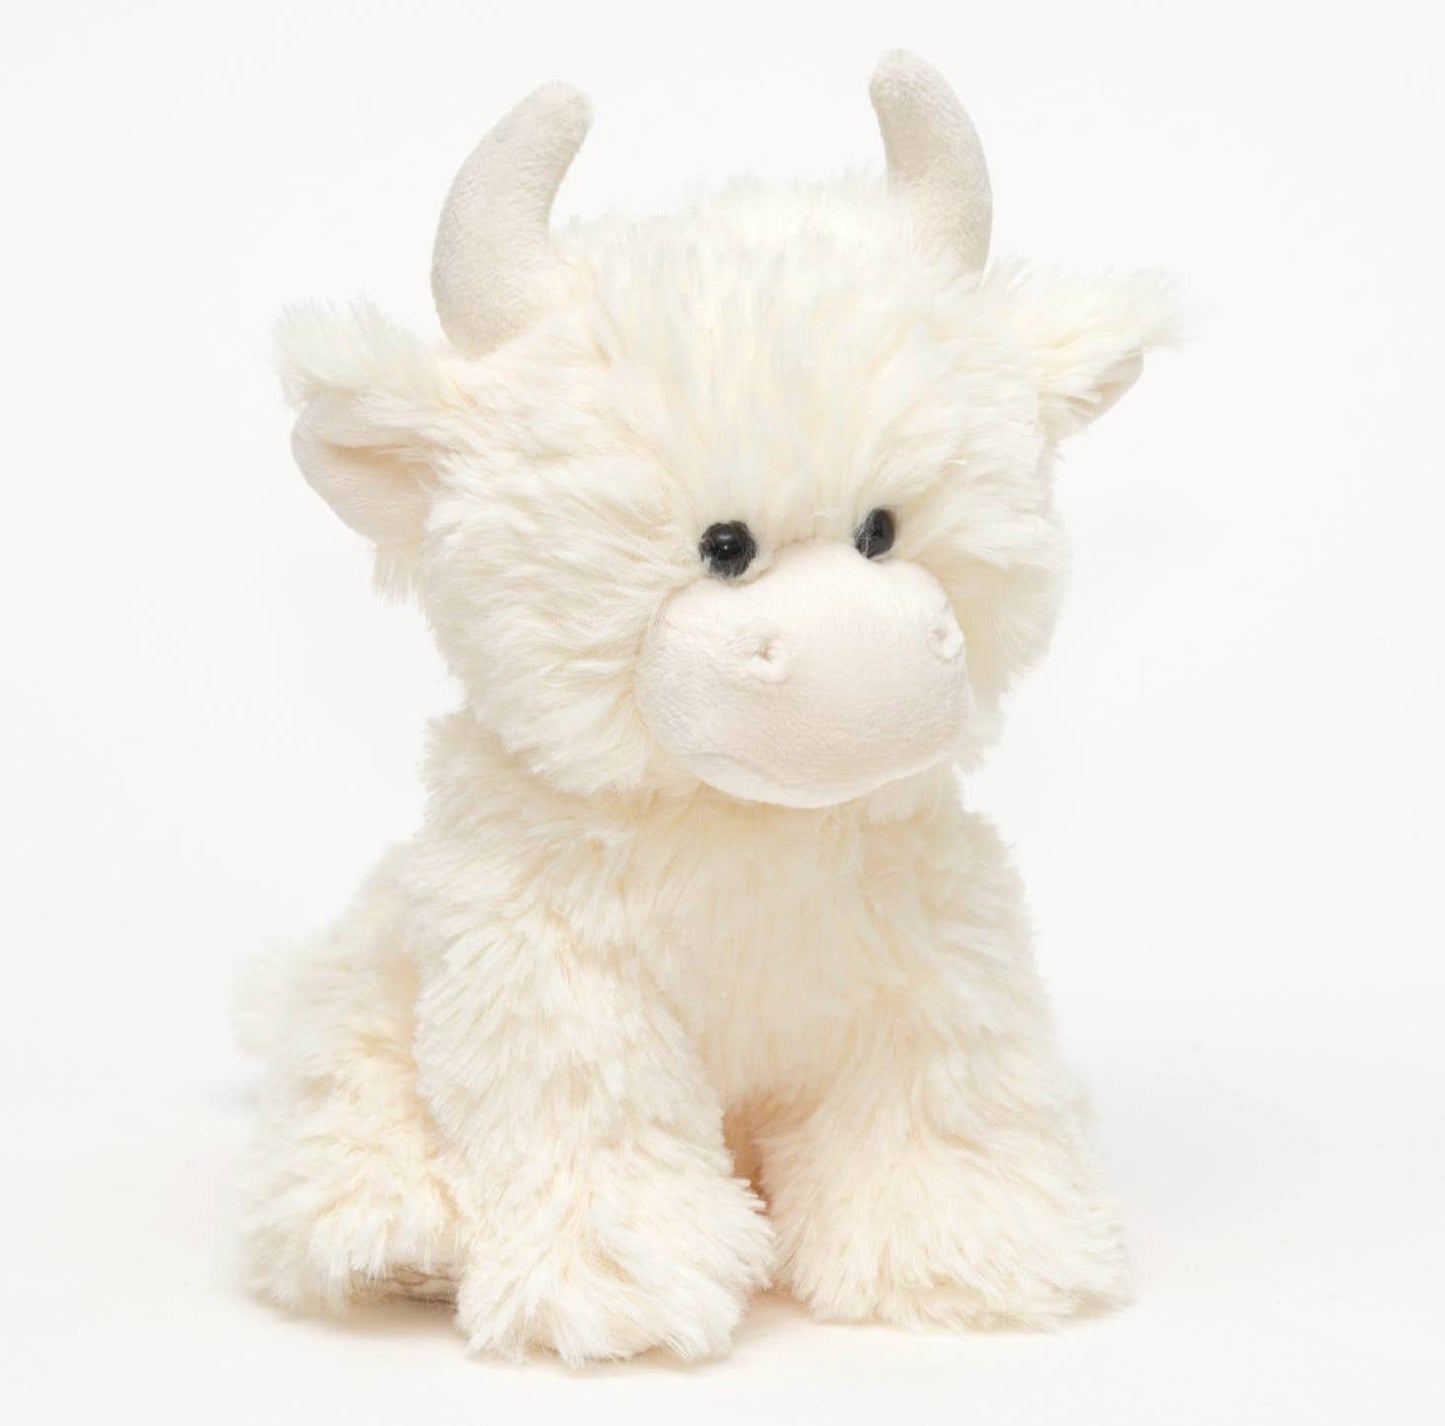 Stuffed Animals Scottish Highland Cow Super Soft Toy - Small Cream - 8 inch JO-MRT80254C-7